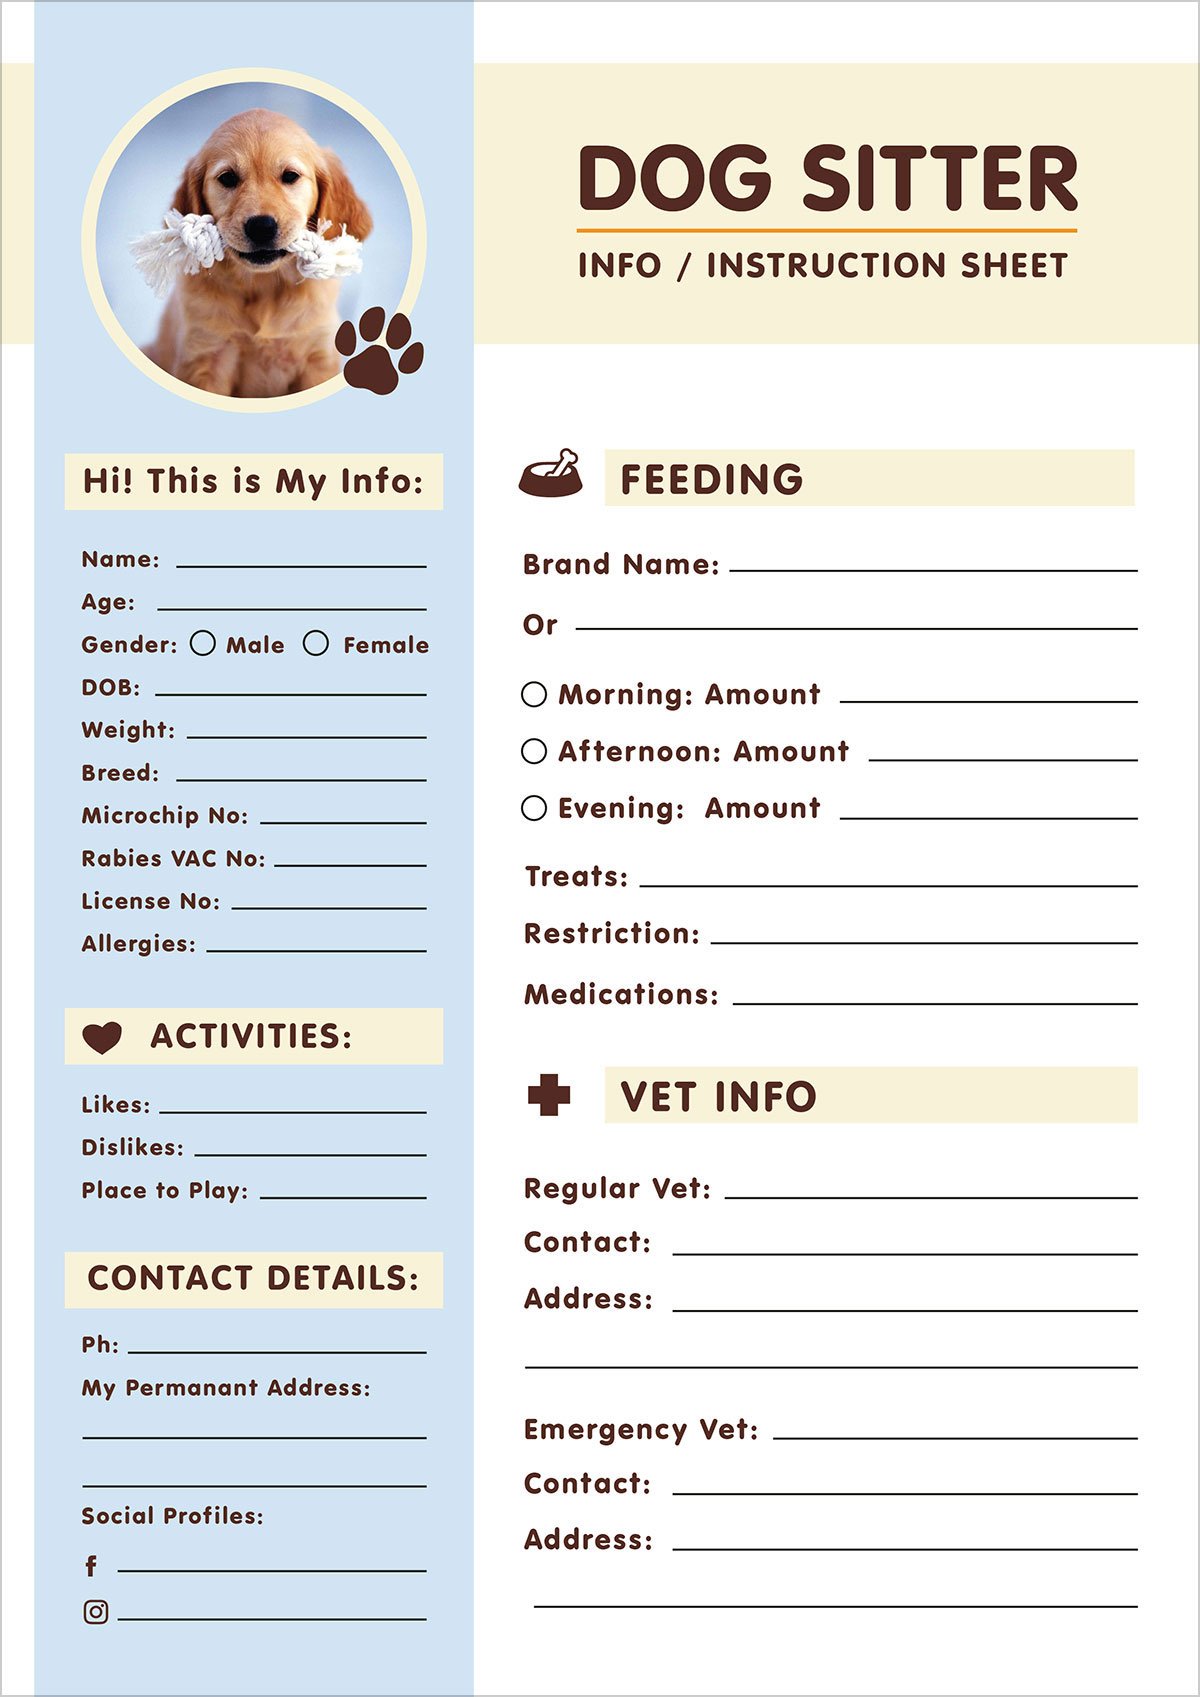 Free-Dog-Sitter-Instruction-Information-Sheet-Design-Professional-Template-Ai